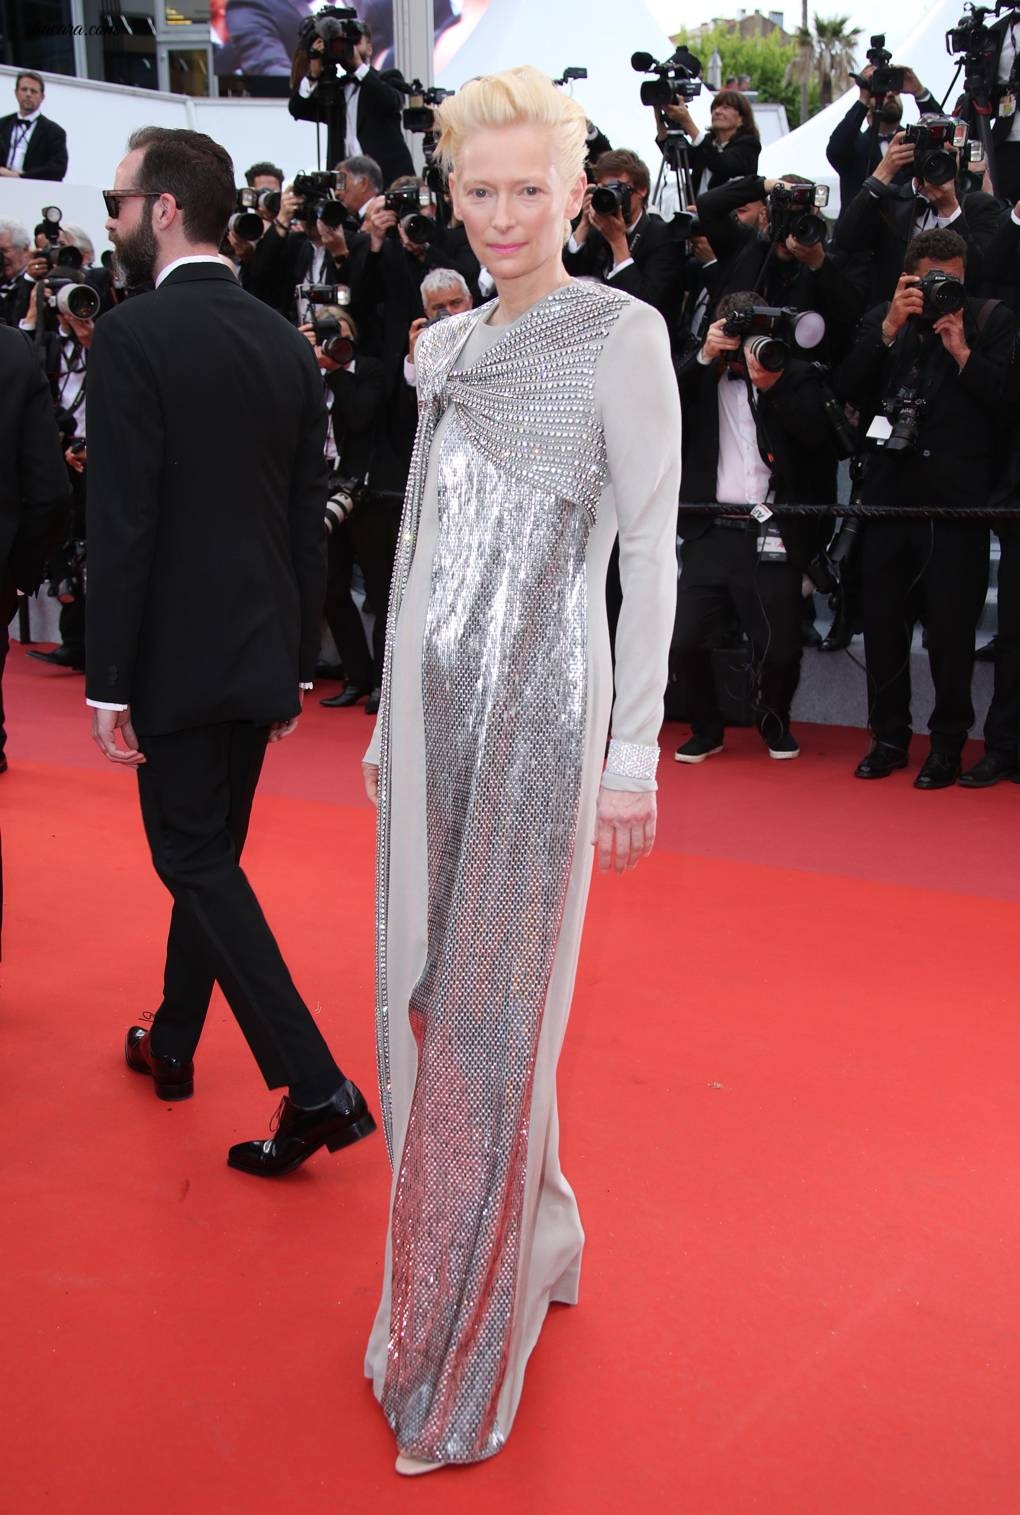 Cannes Film Festival Red Carpet 2019